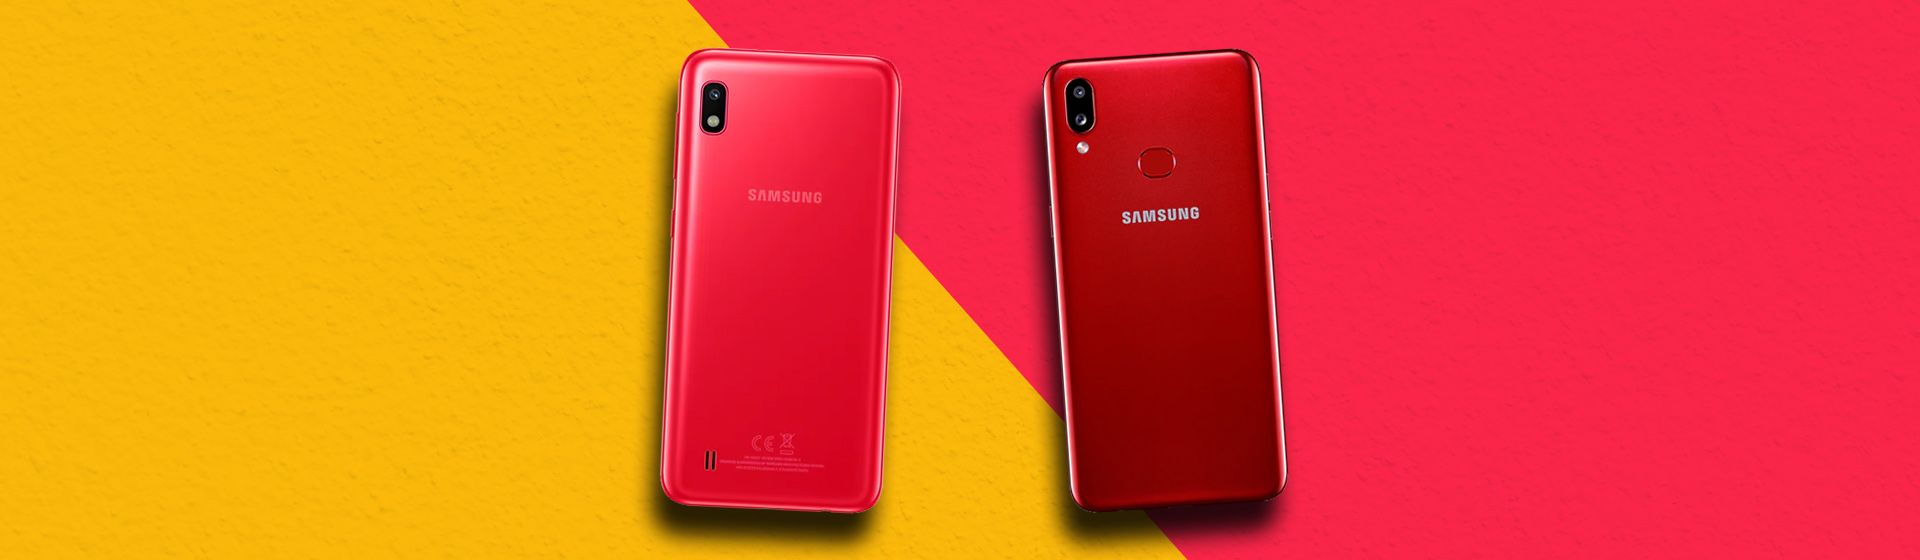 Galaxy A10 vs Galaxy A10s: compare ficha técnica dos celulares Samsung -  DeUmZoom